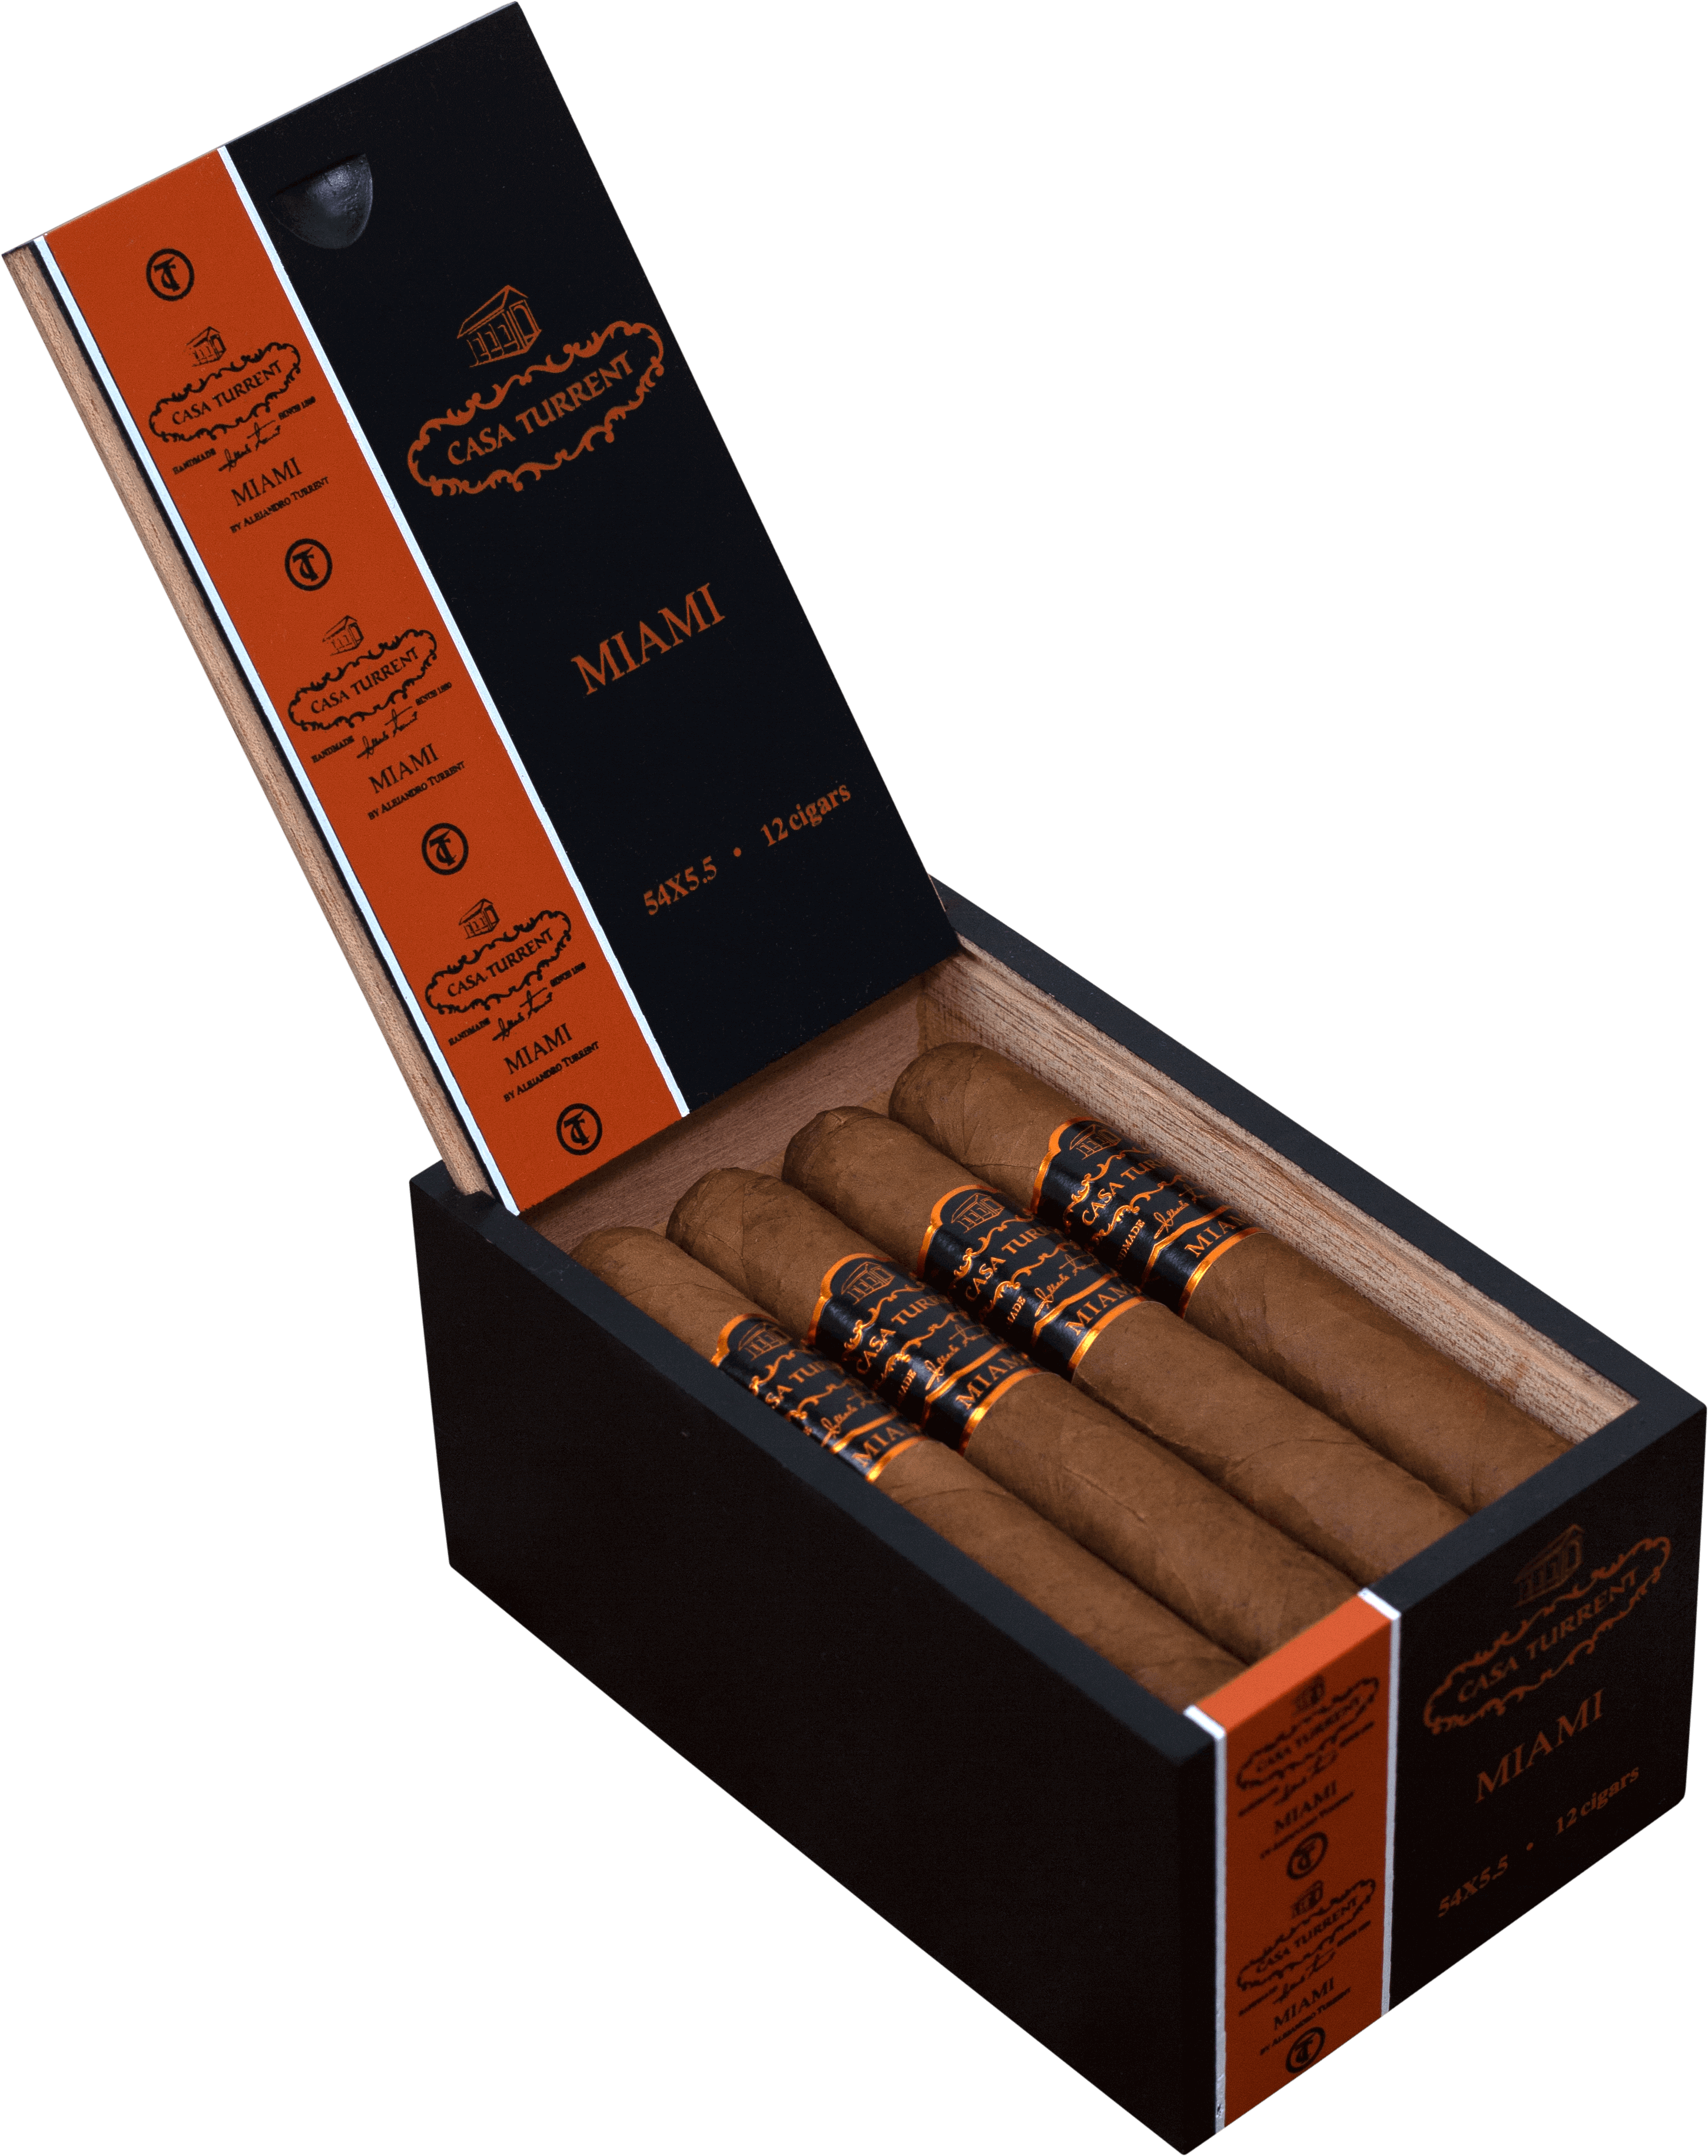 12er Kiste Casa Turrent Origen Miami Robusto Zigarren, Box geöffnet